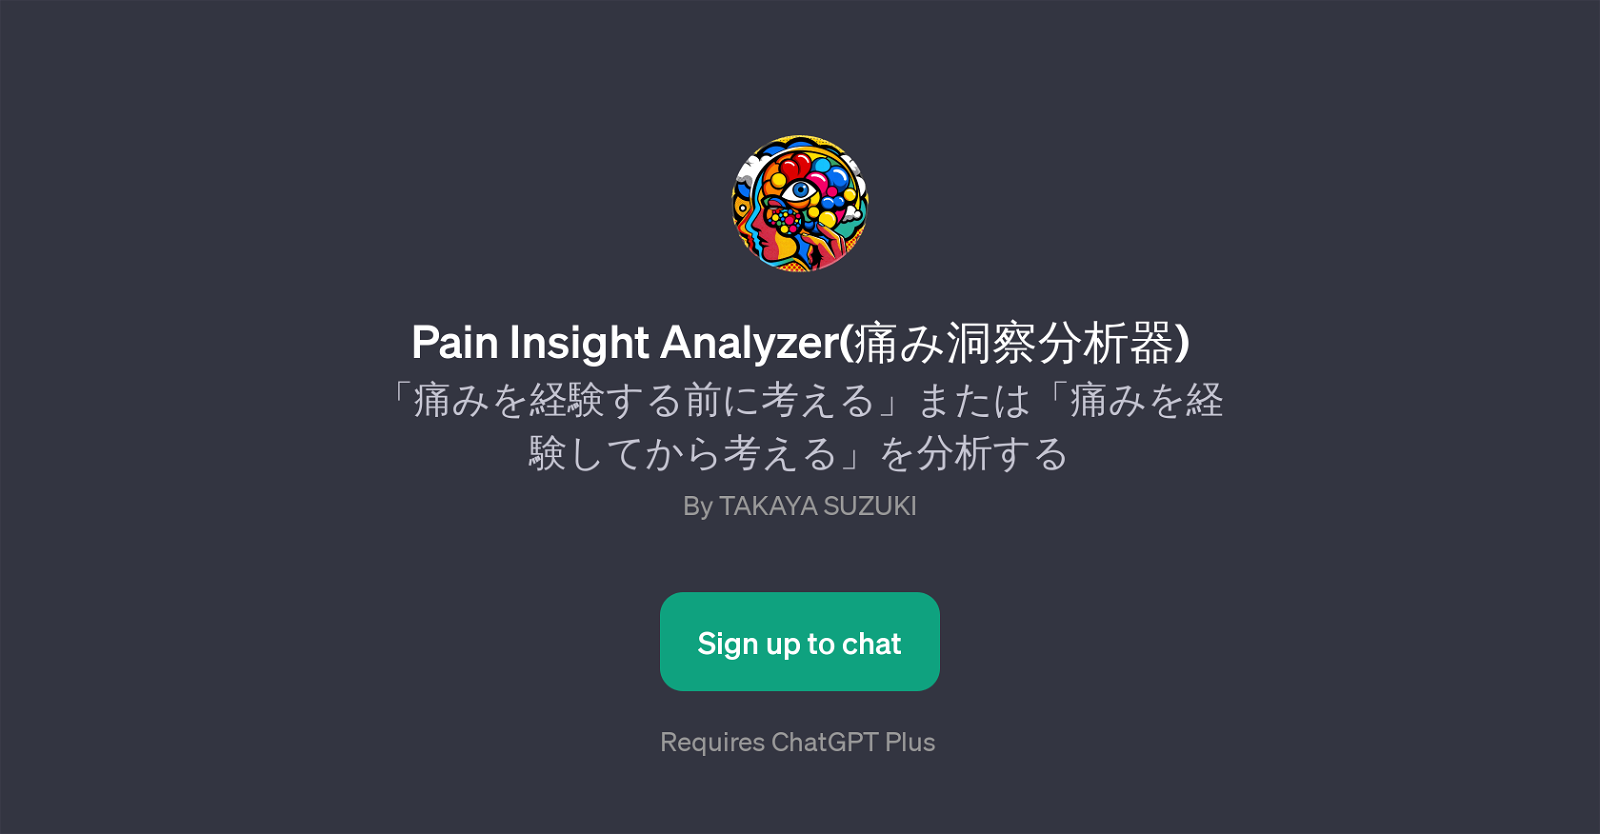 Pain Insight Analyzer website